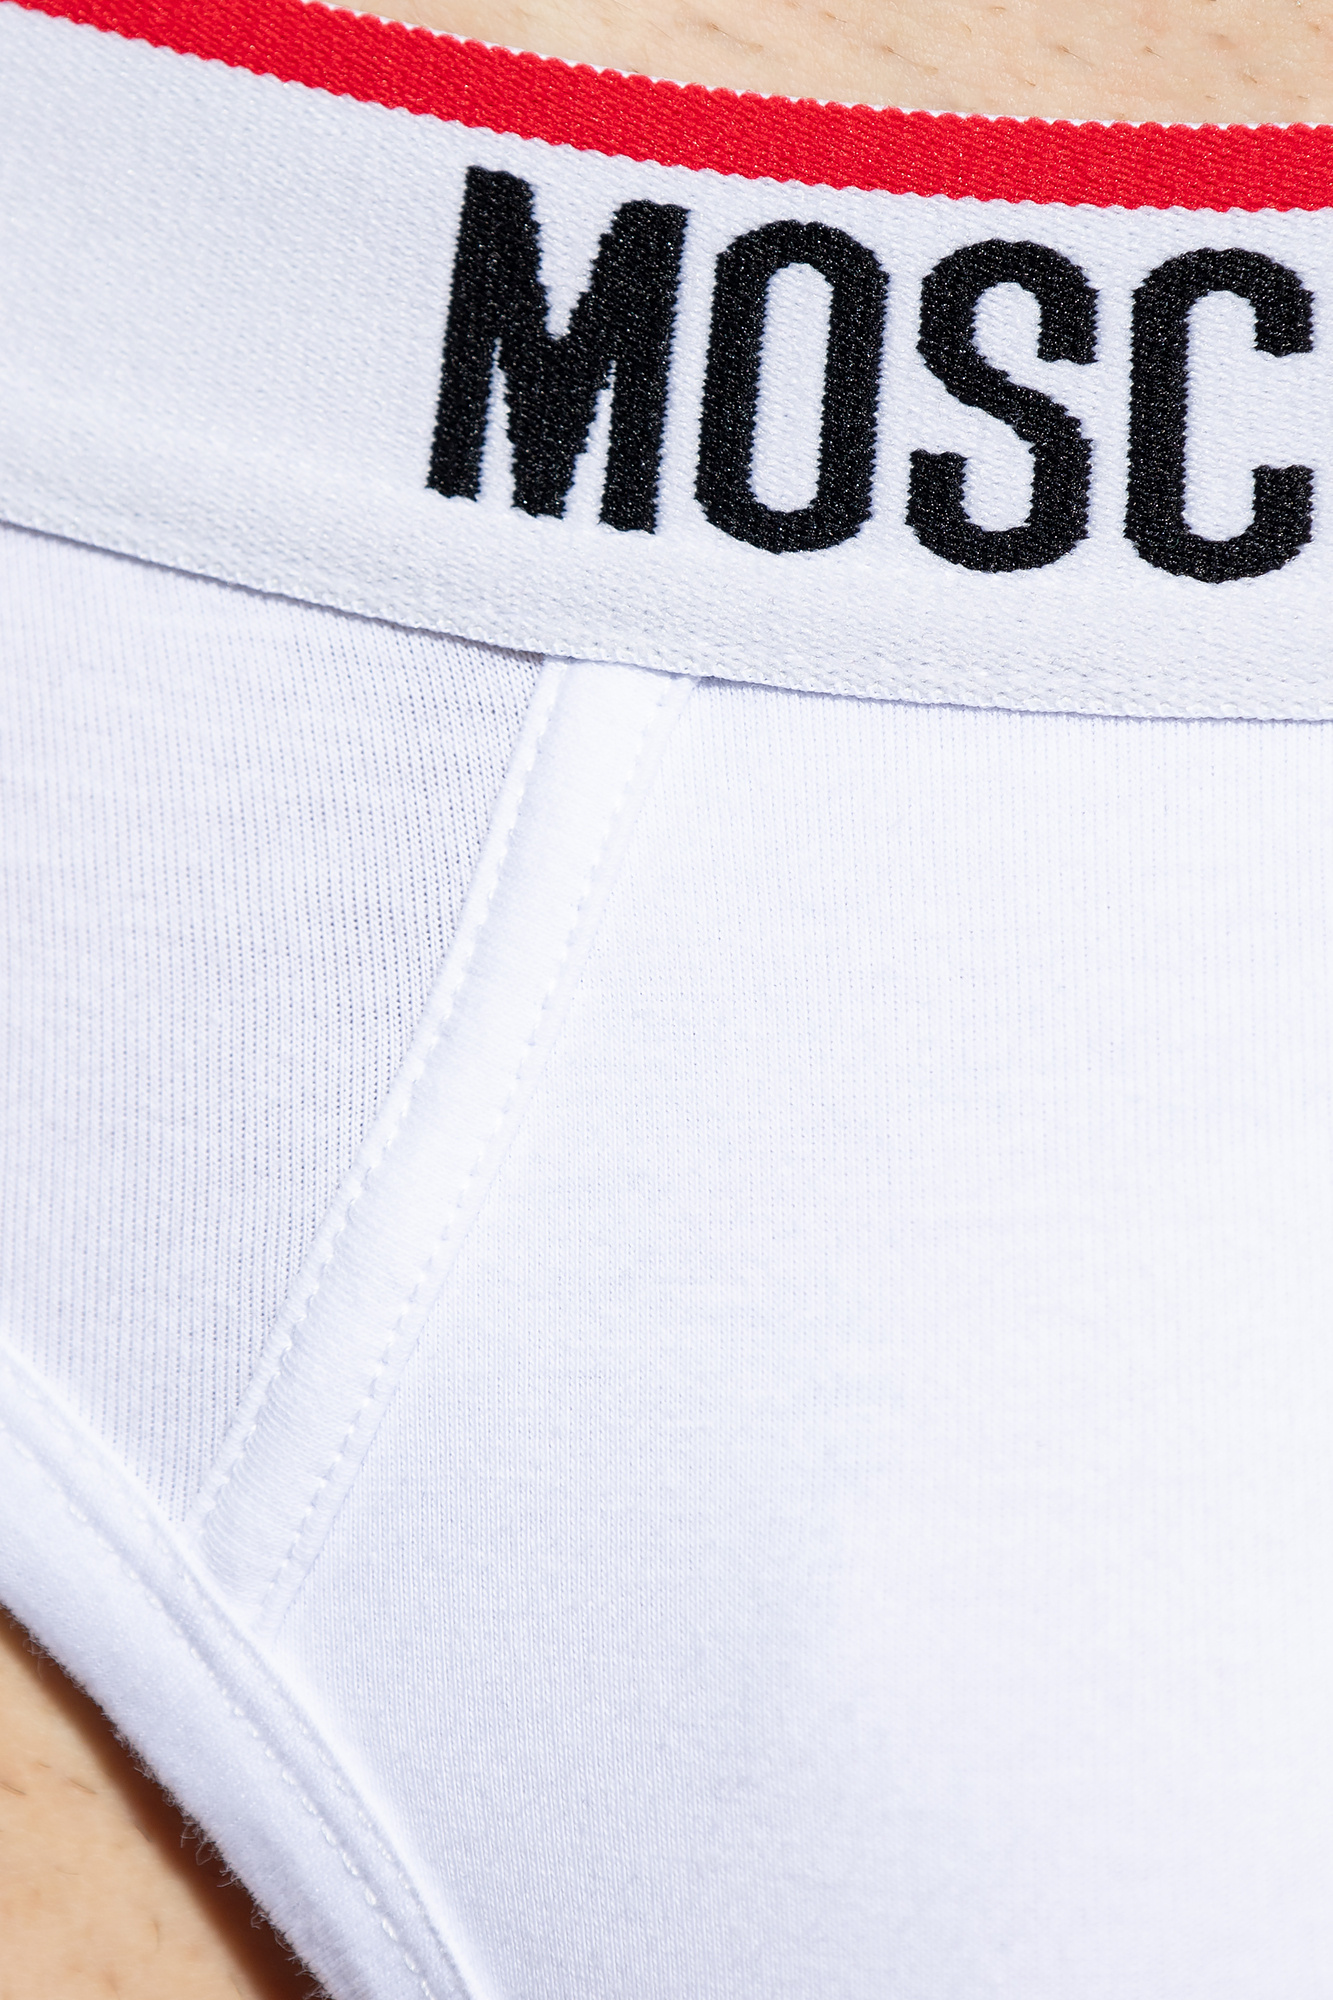 White Branded briefs 2-pack Moschino - Vitkac Canada